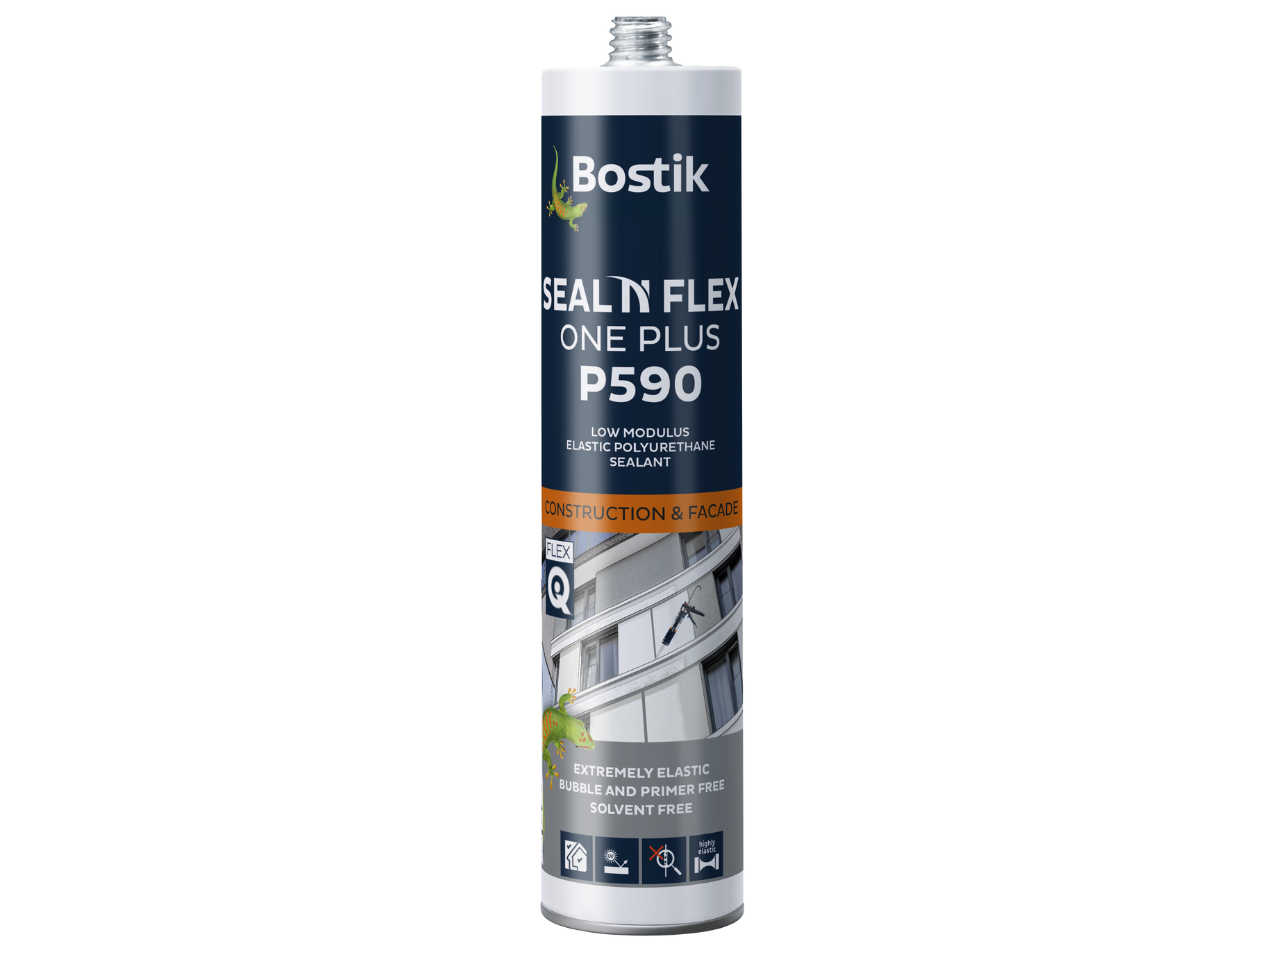 Bostik P590 Seal ‘N’ Flex One Plus